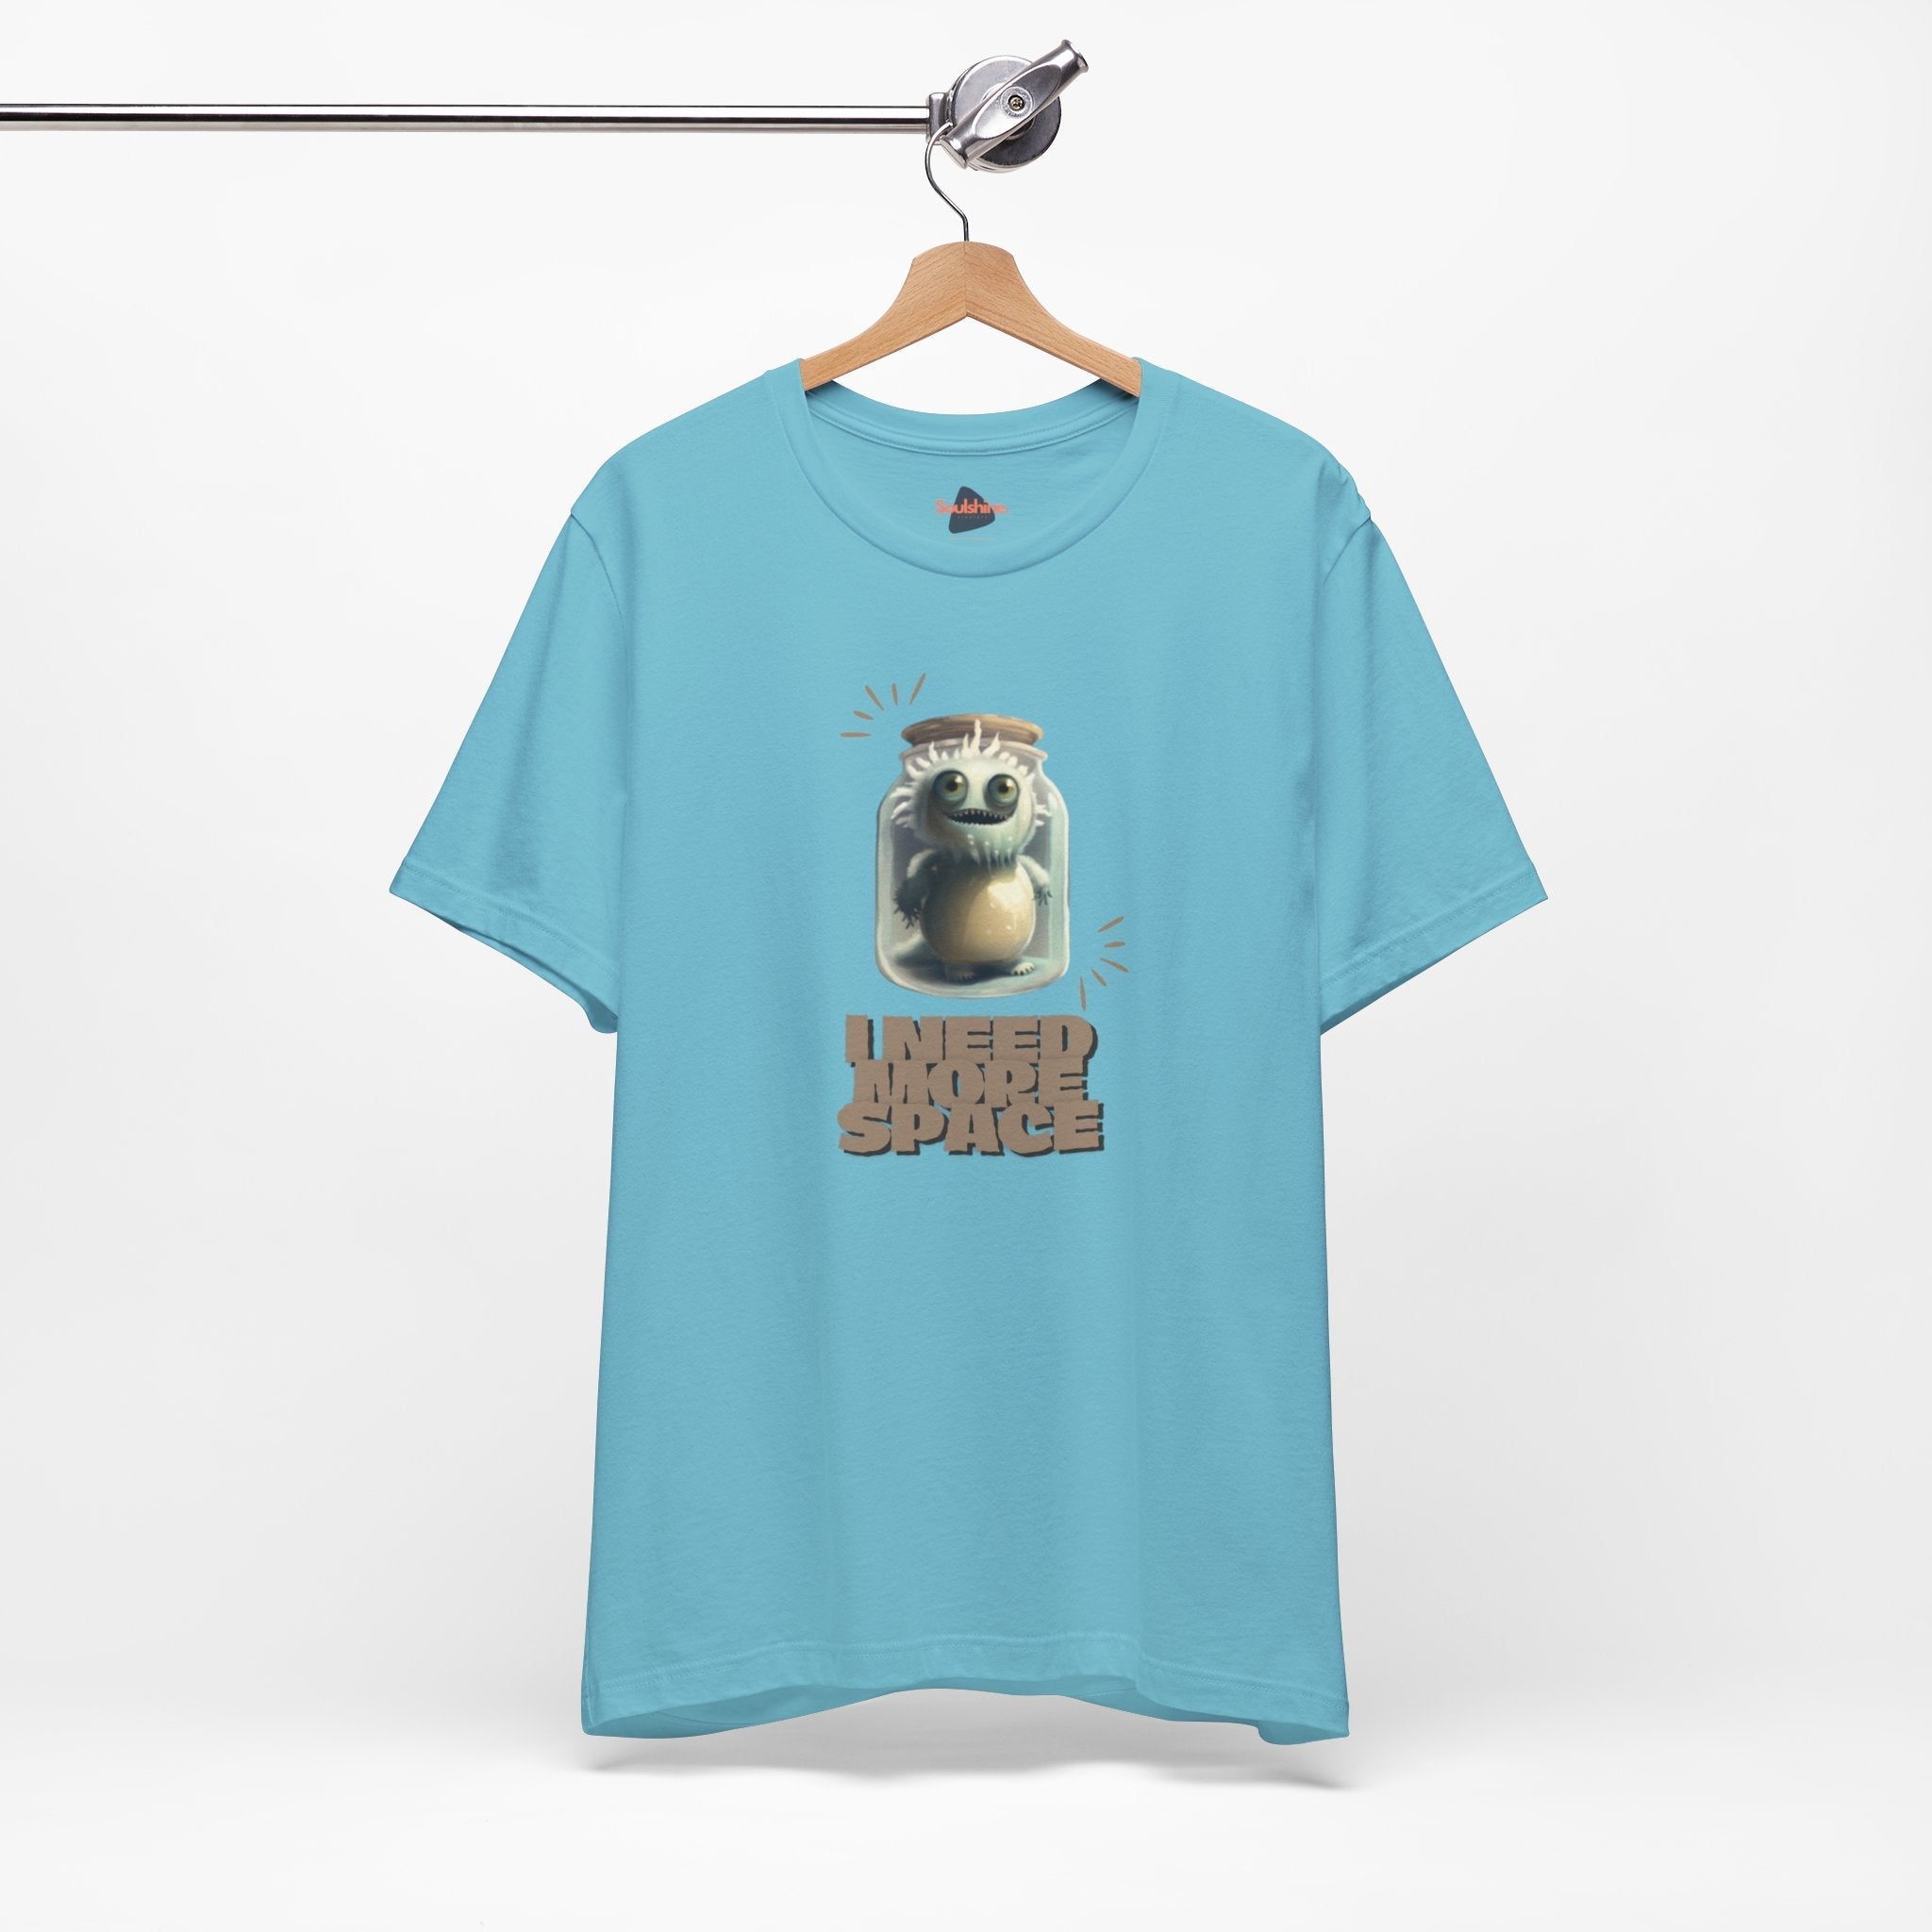 I need more space - Funny T-Shirt - Unisex Jersey Short Sleeve Tee - US T-Shirt by Soulshinecreators | Soulshinecreators